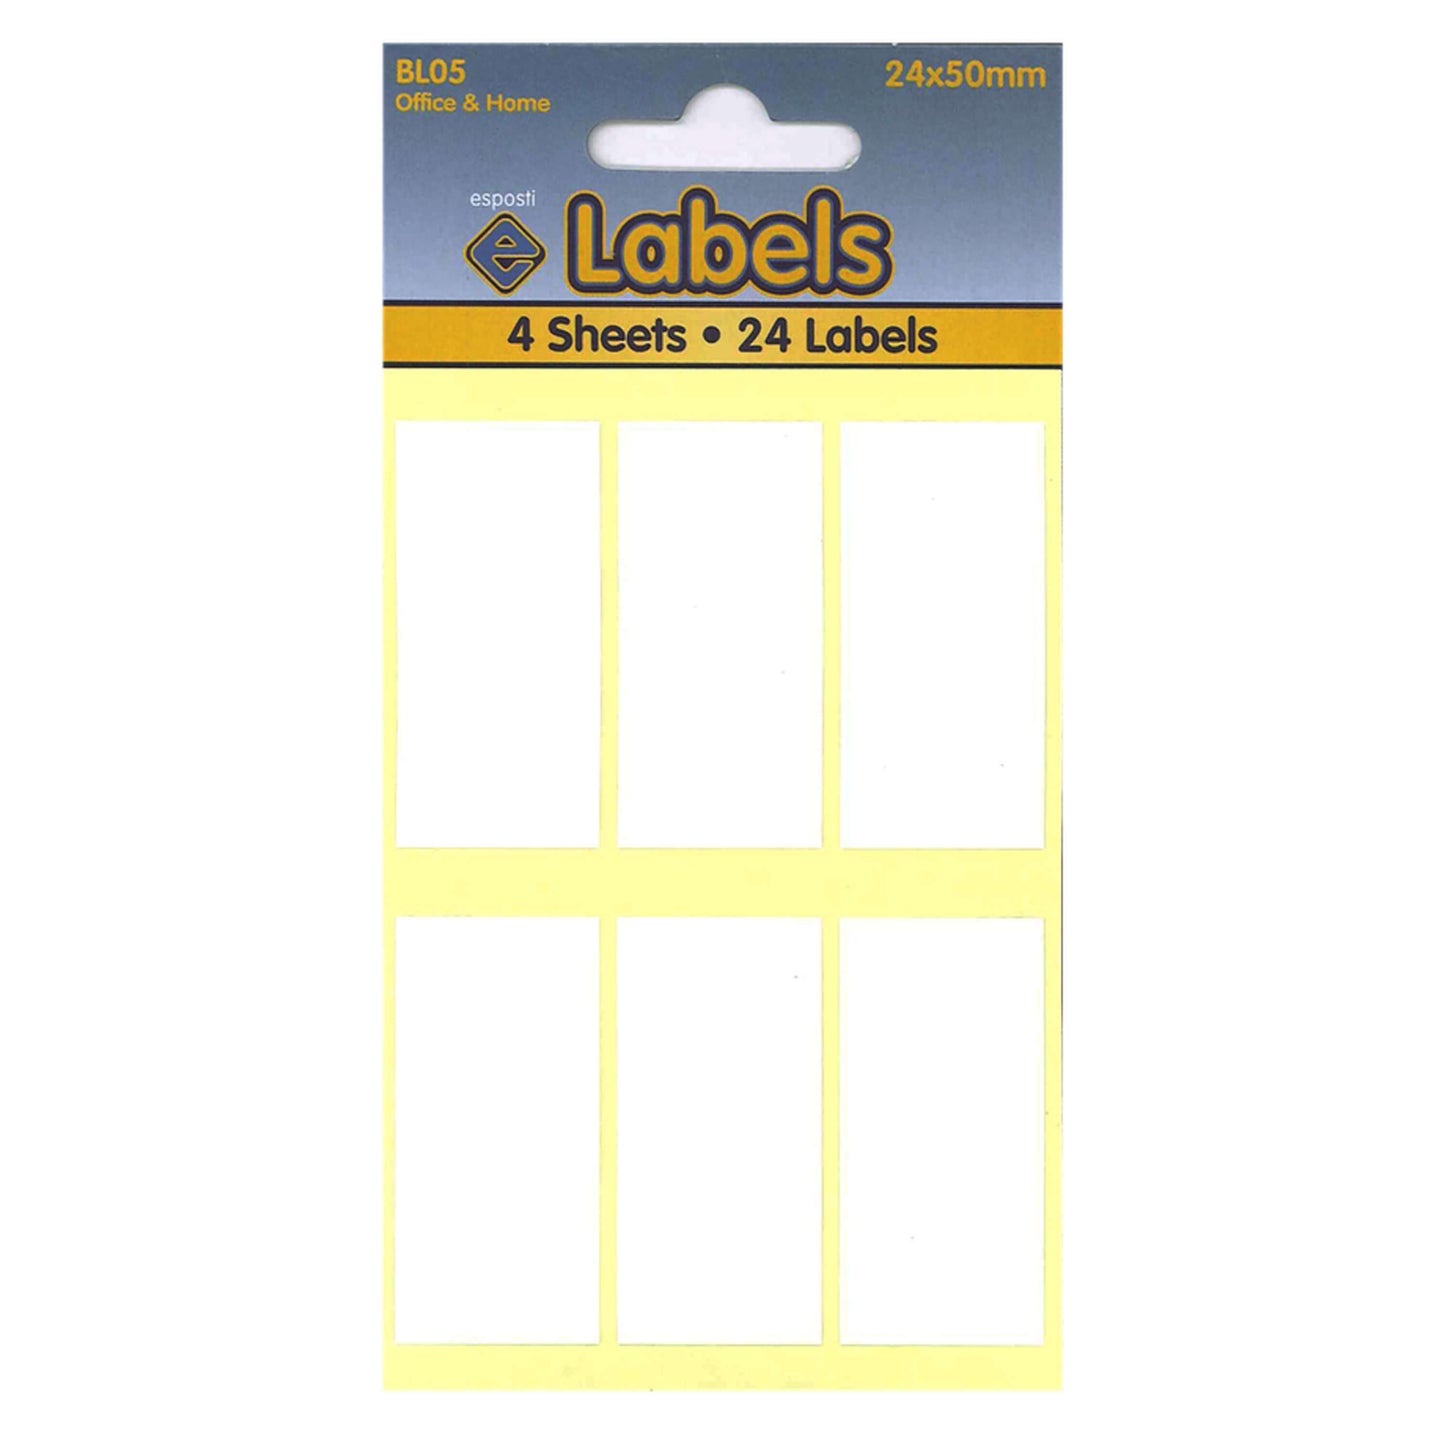 White Label 24 X 50mm Stickers - BL05